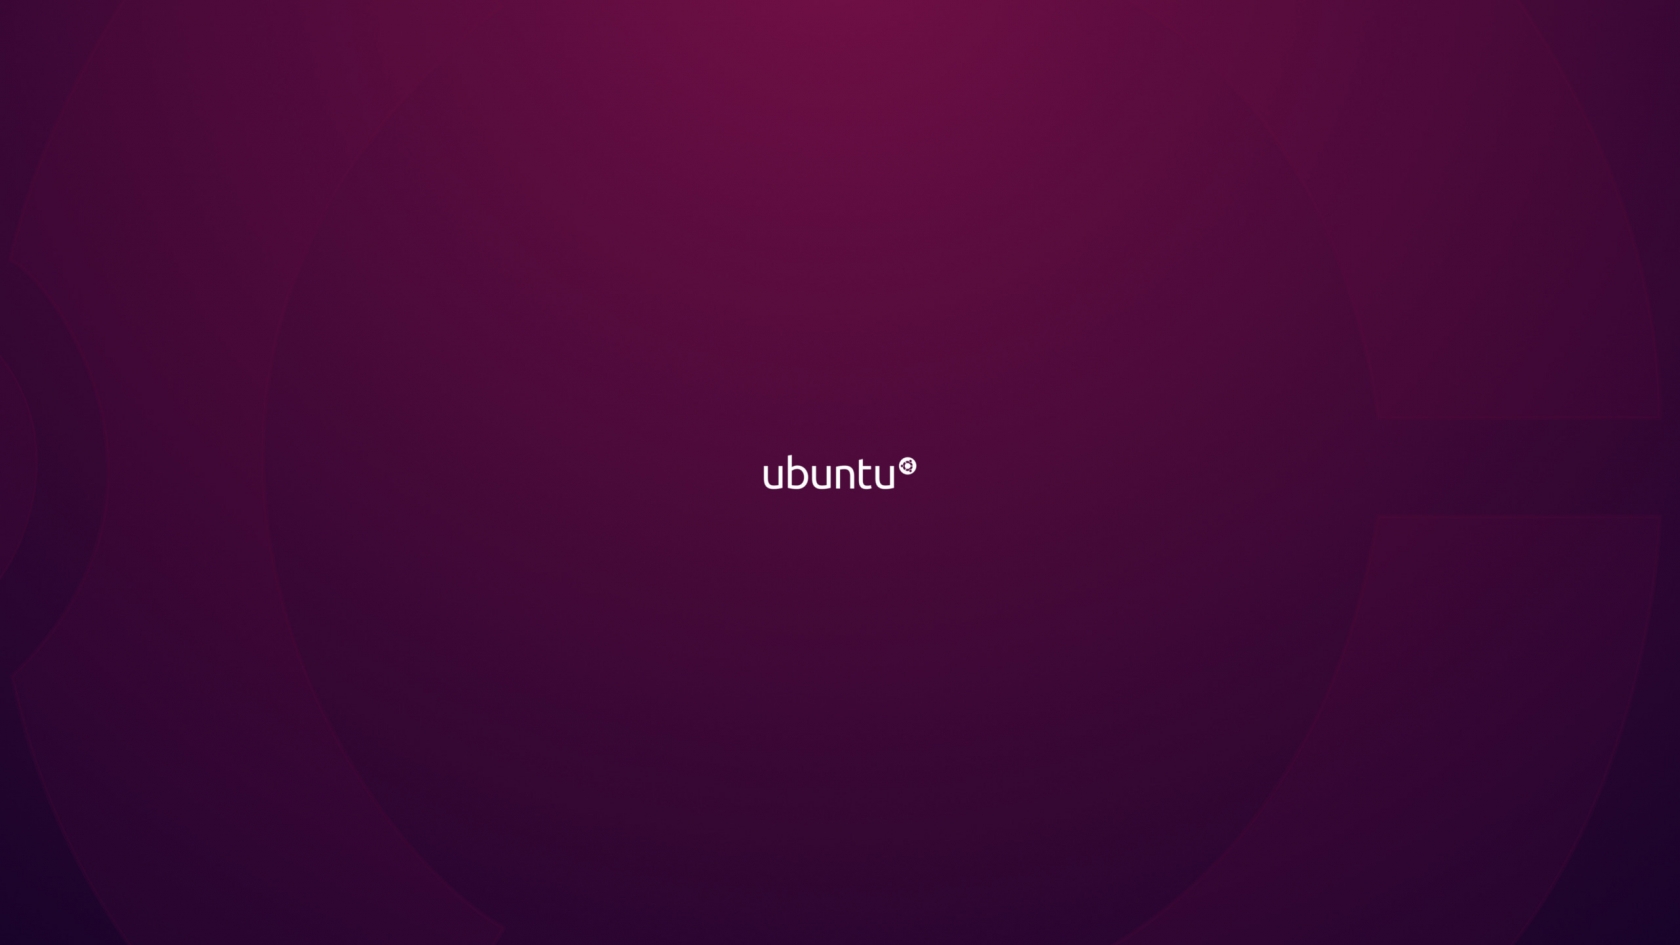 Ubuntu Purple for 1680 x 945 HDTV resolution